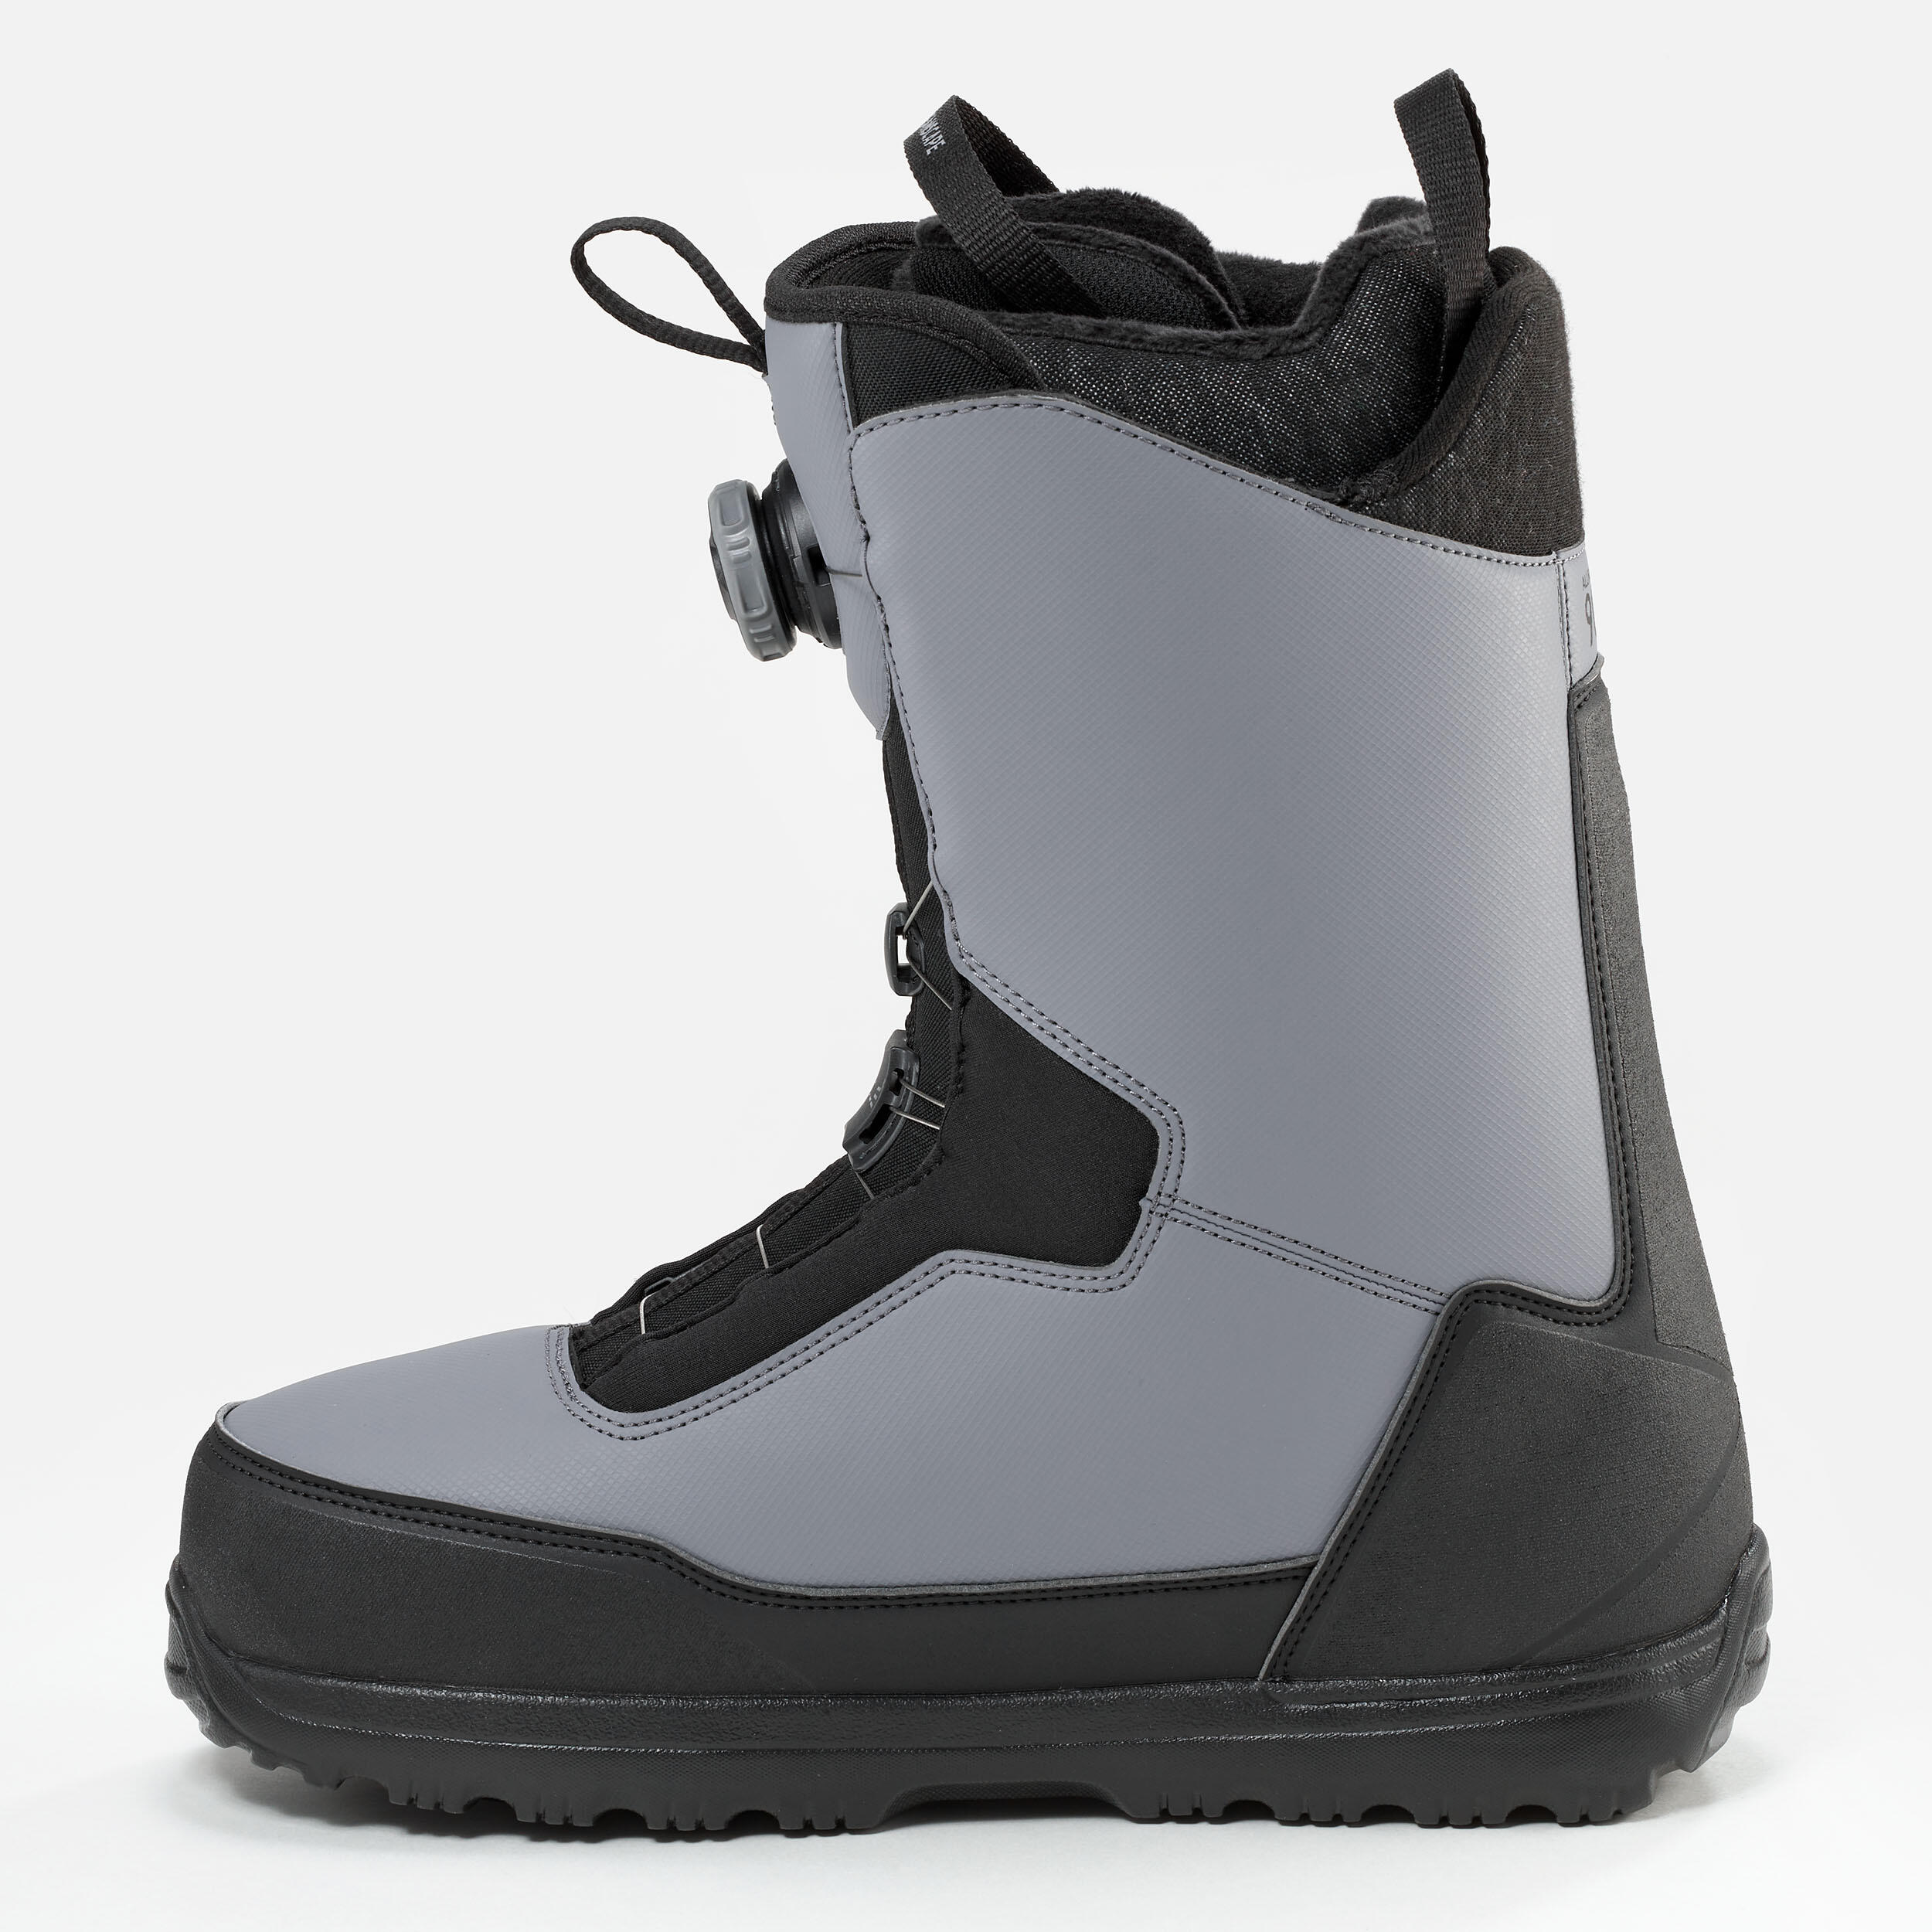 Double wheel snowboard boots, rigid flex - Allroad 900 Grey 5/15